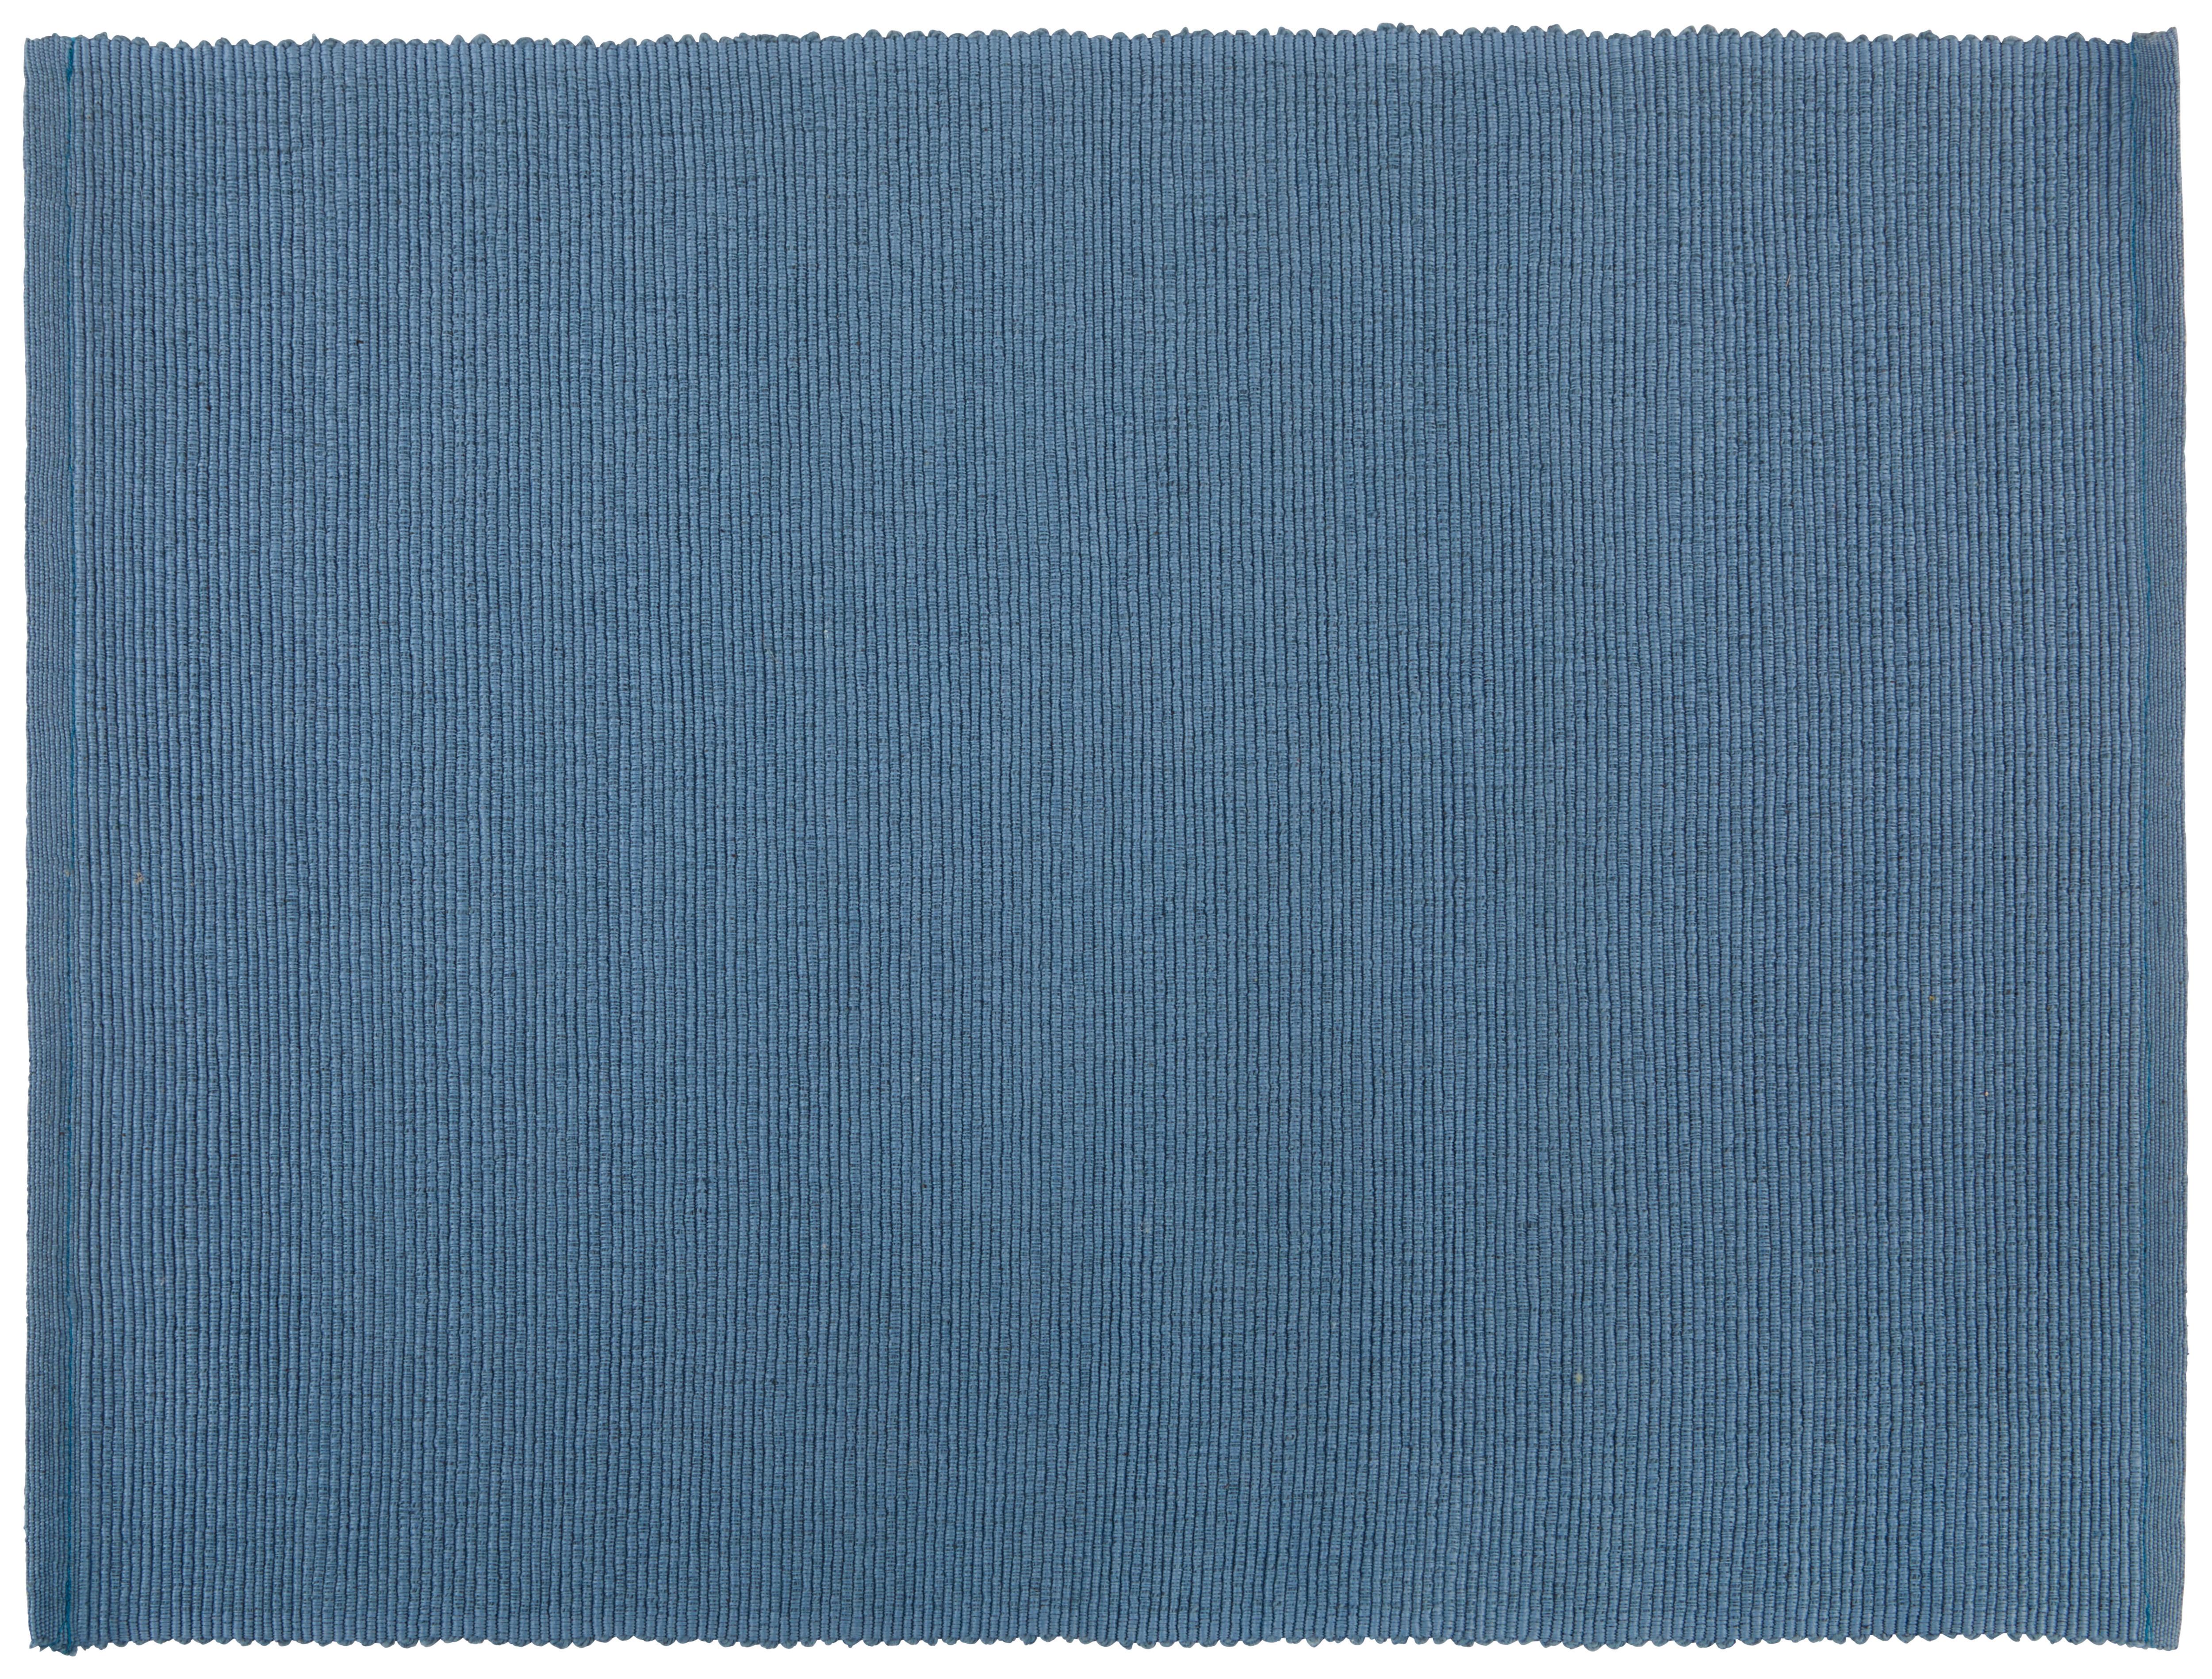 Tischset Maren in Stahlblau - Blau, Textil (33/45cm) - Based